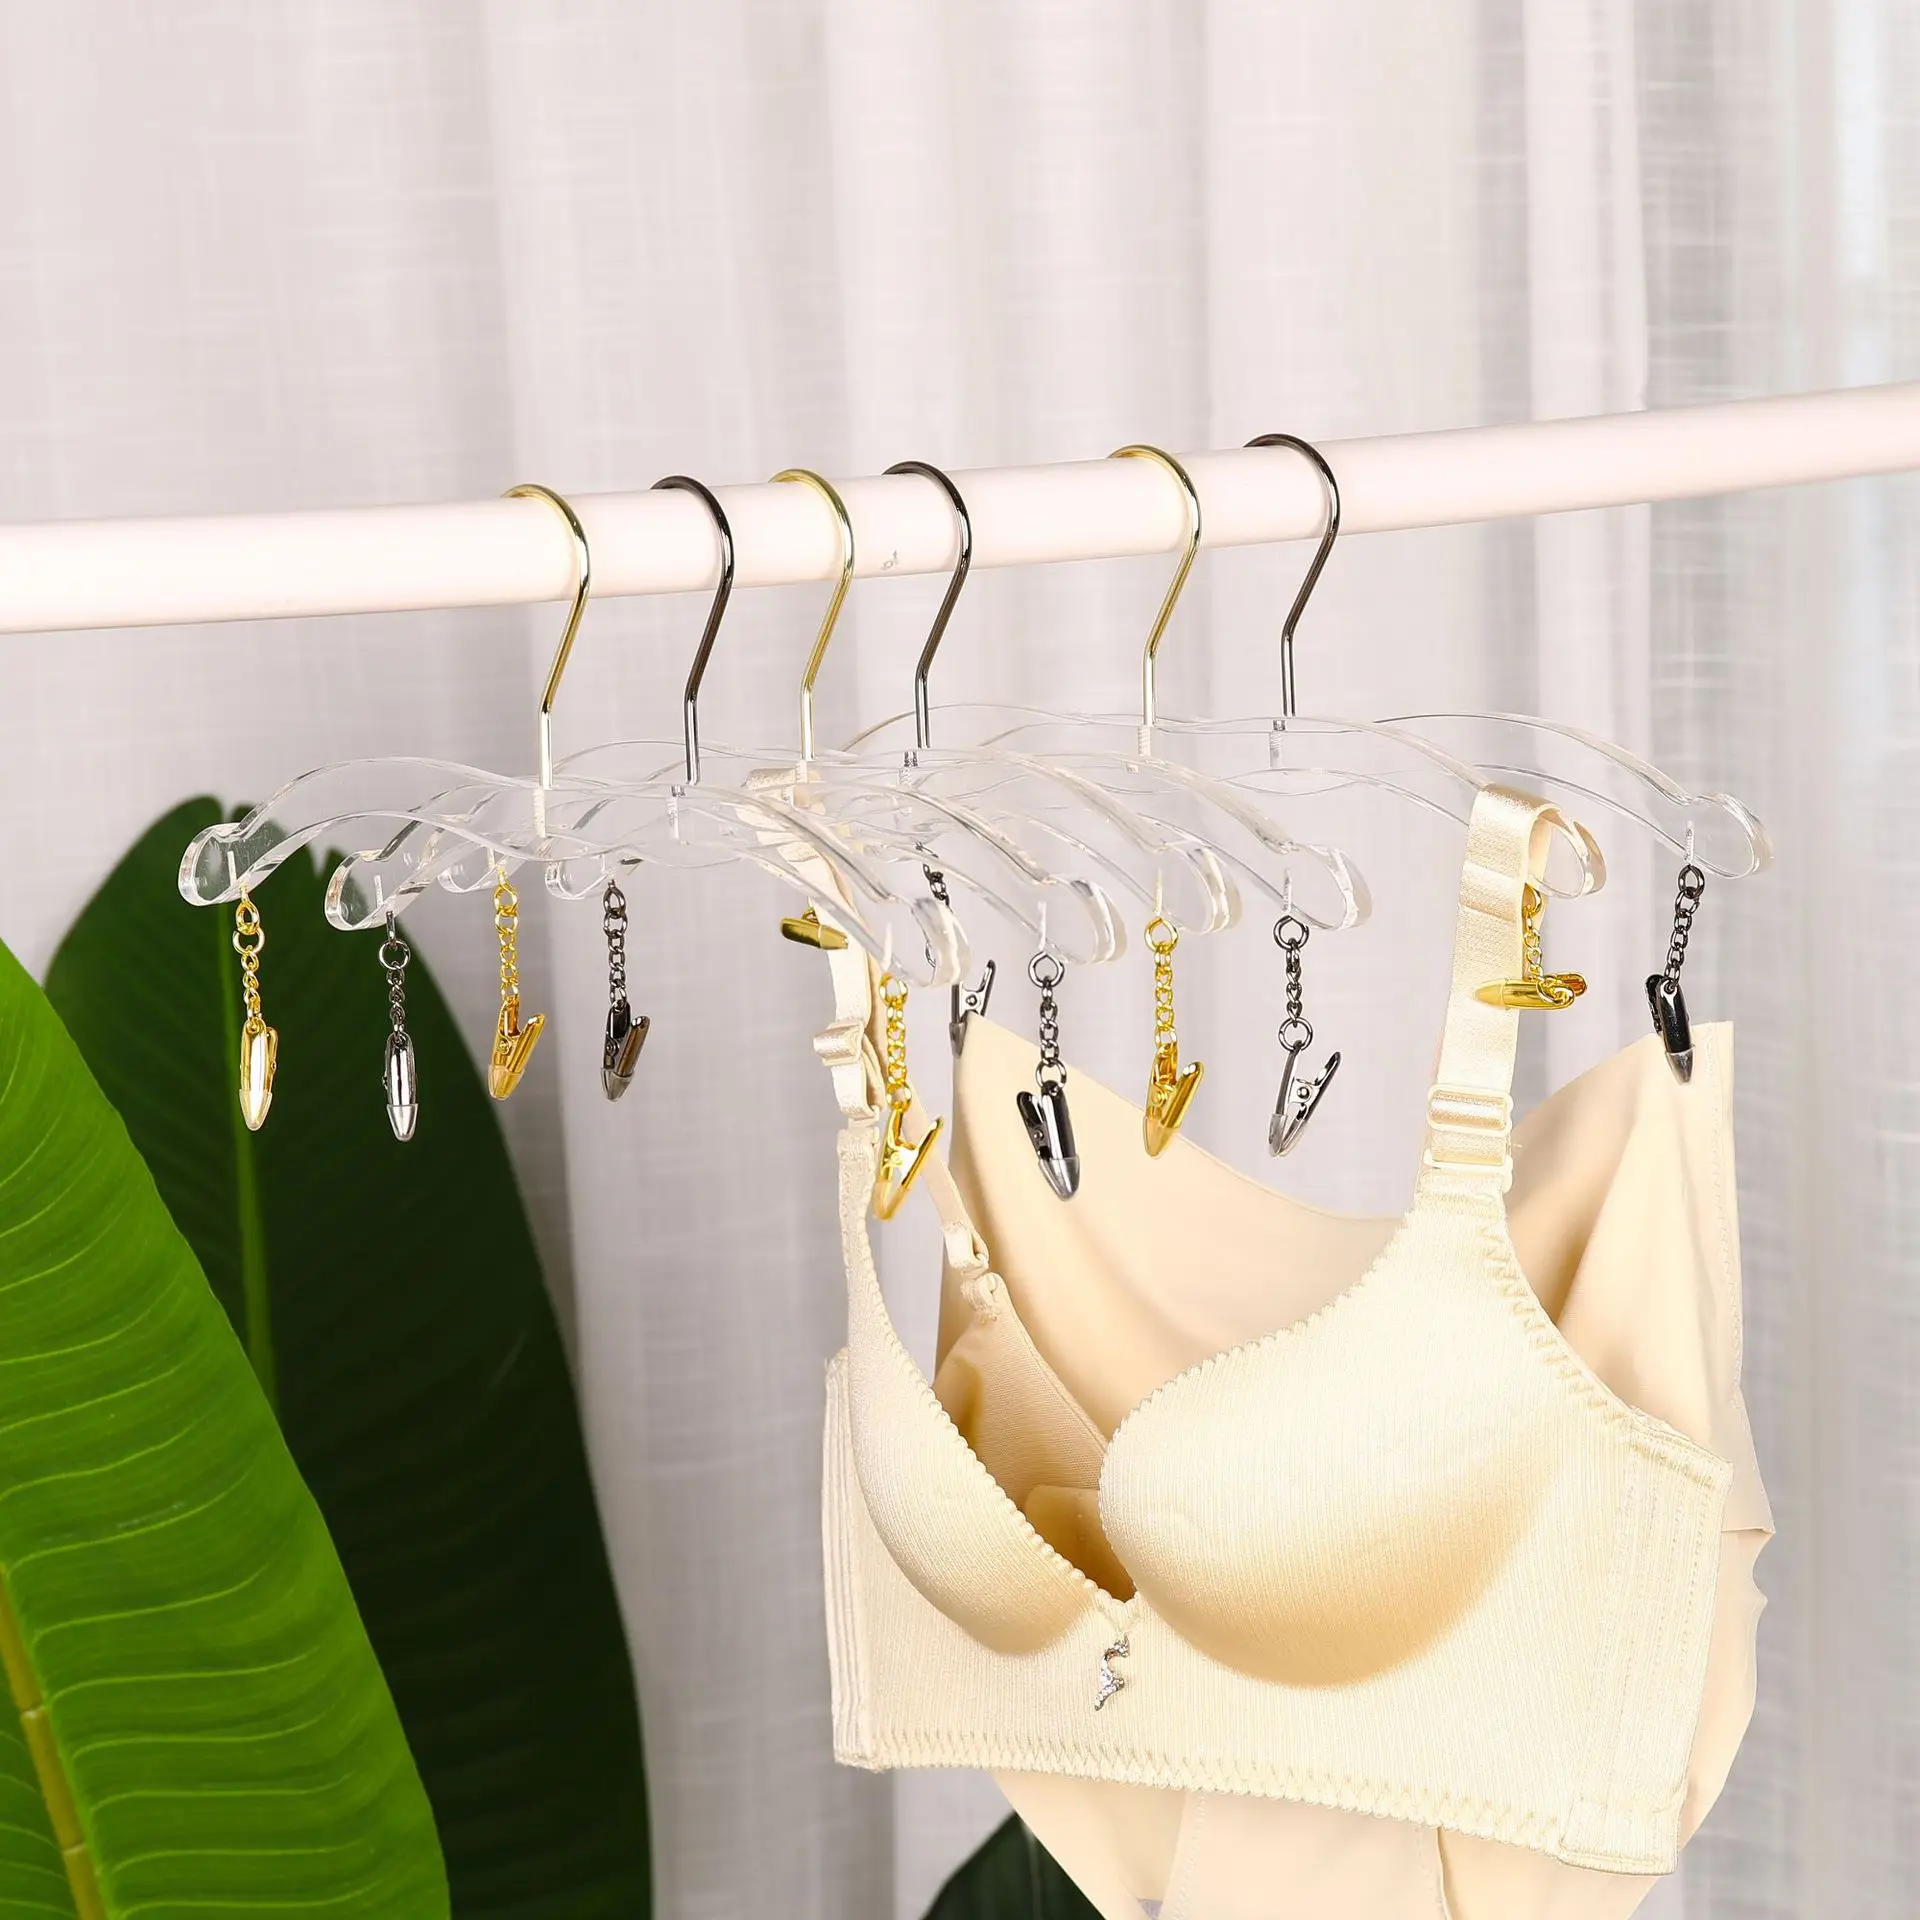 Plastic Hanging Bra/Bikini/Lingerie Hanger Display $3.45-$4.50 - arts &  crafts - by owner - sale - craigslist